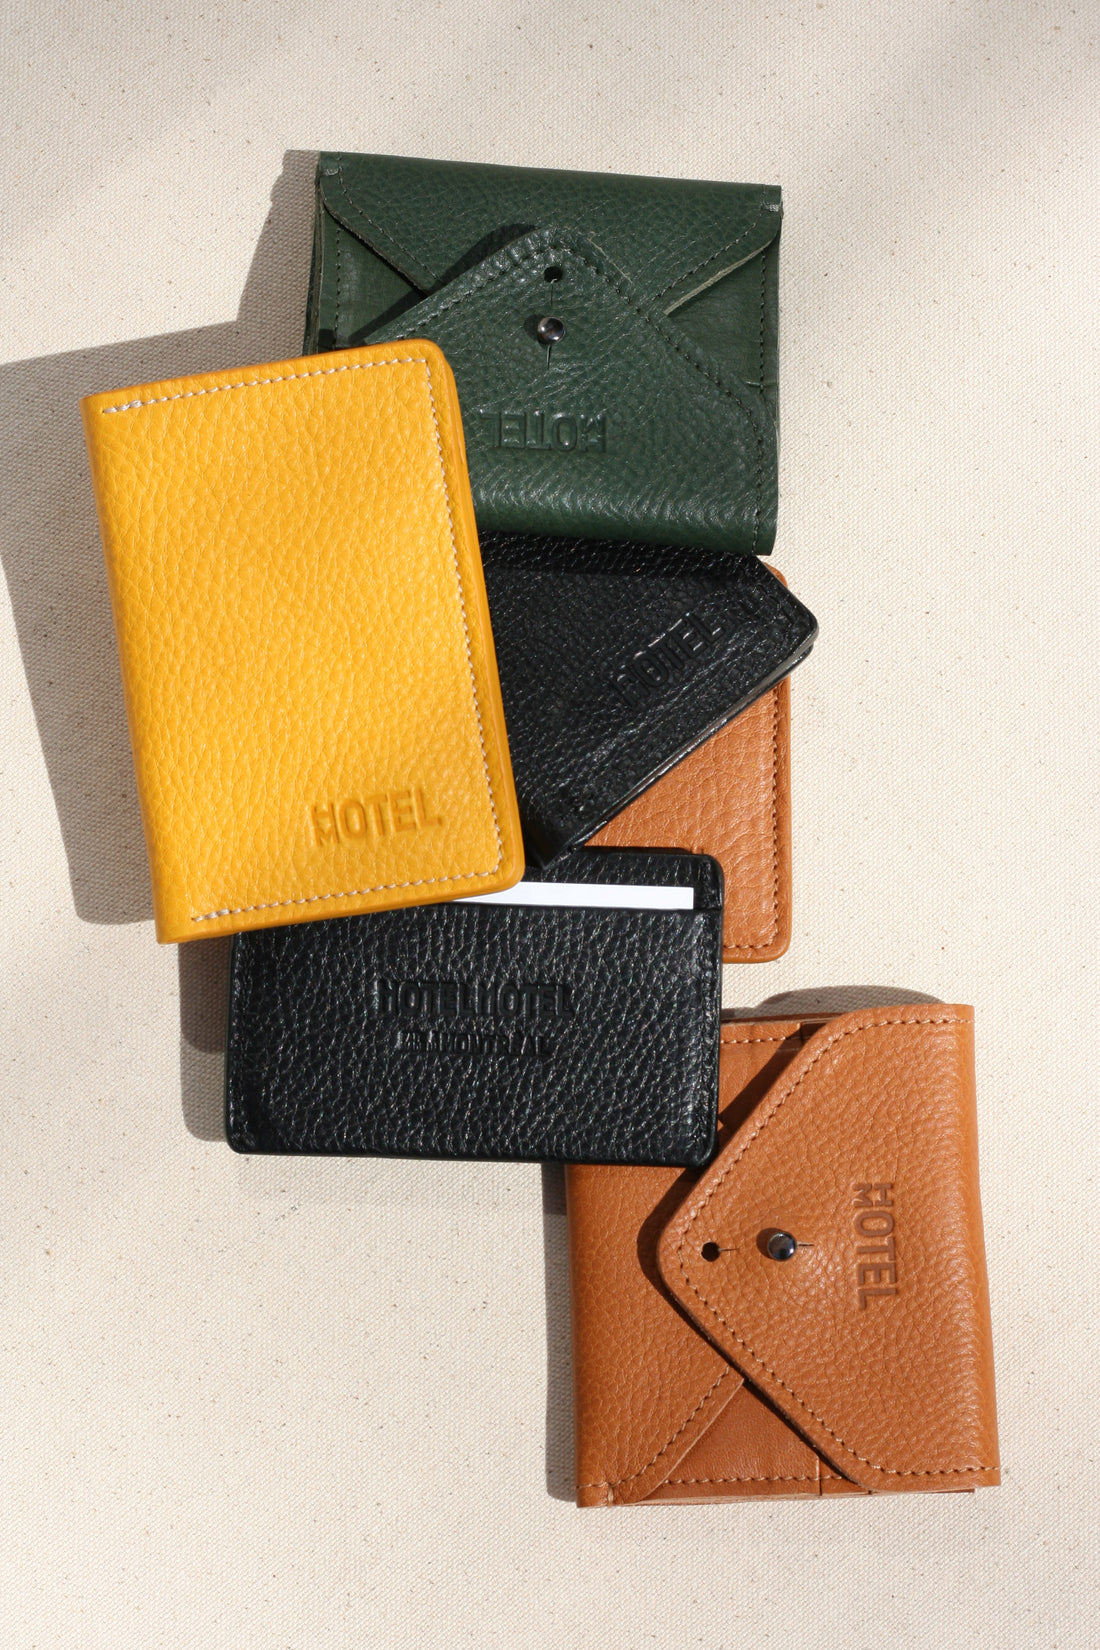 Envelope wallet by HOTELMOTEL